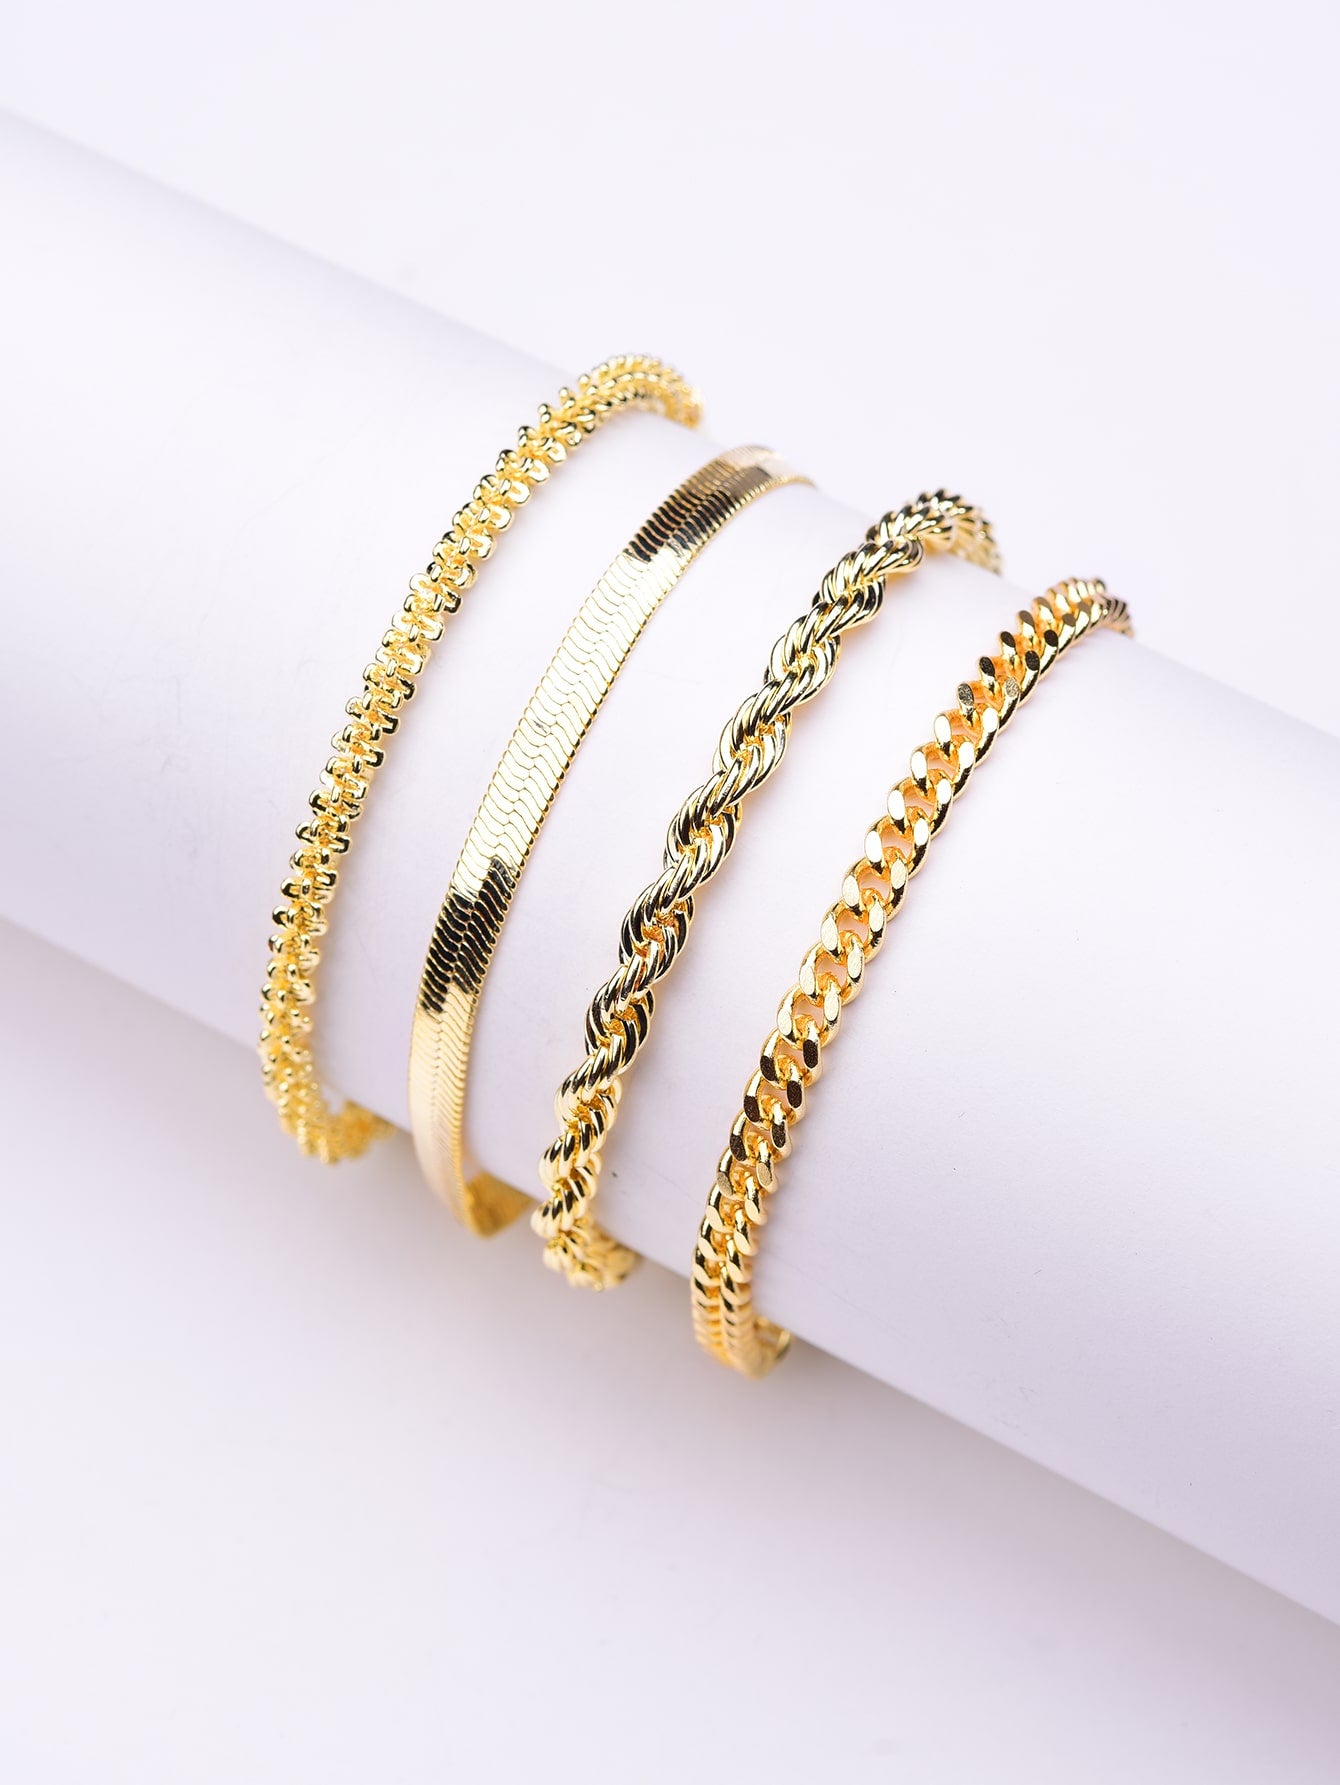 Golden Touch of Sophistication(set of 4 bracelets) - CélineDor